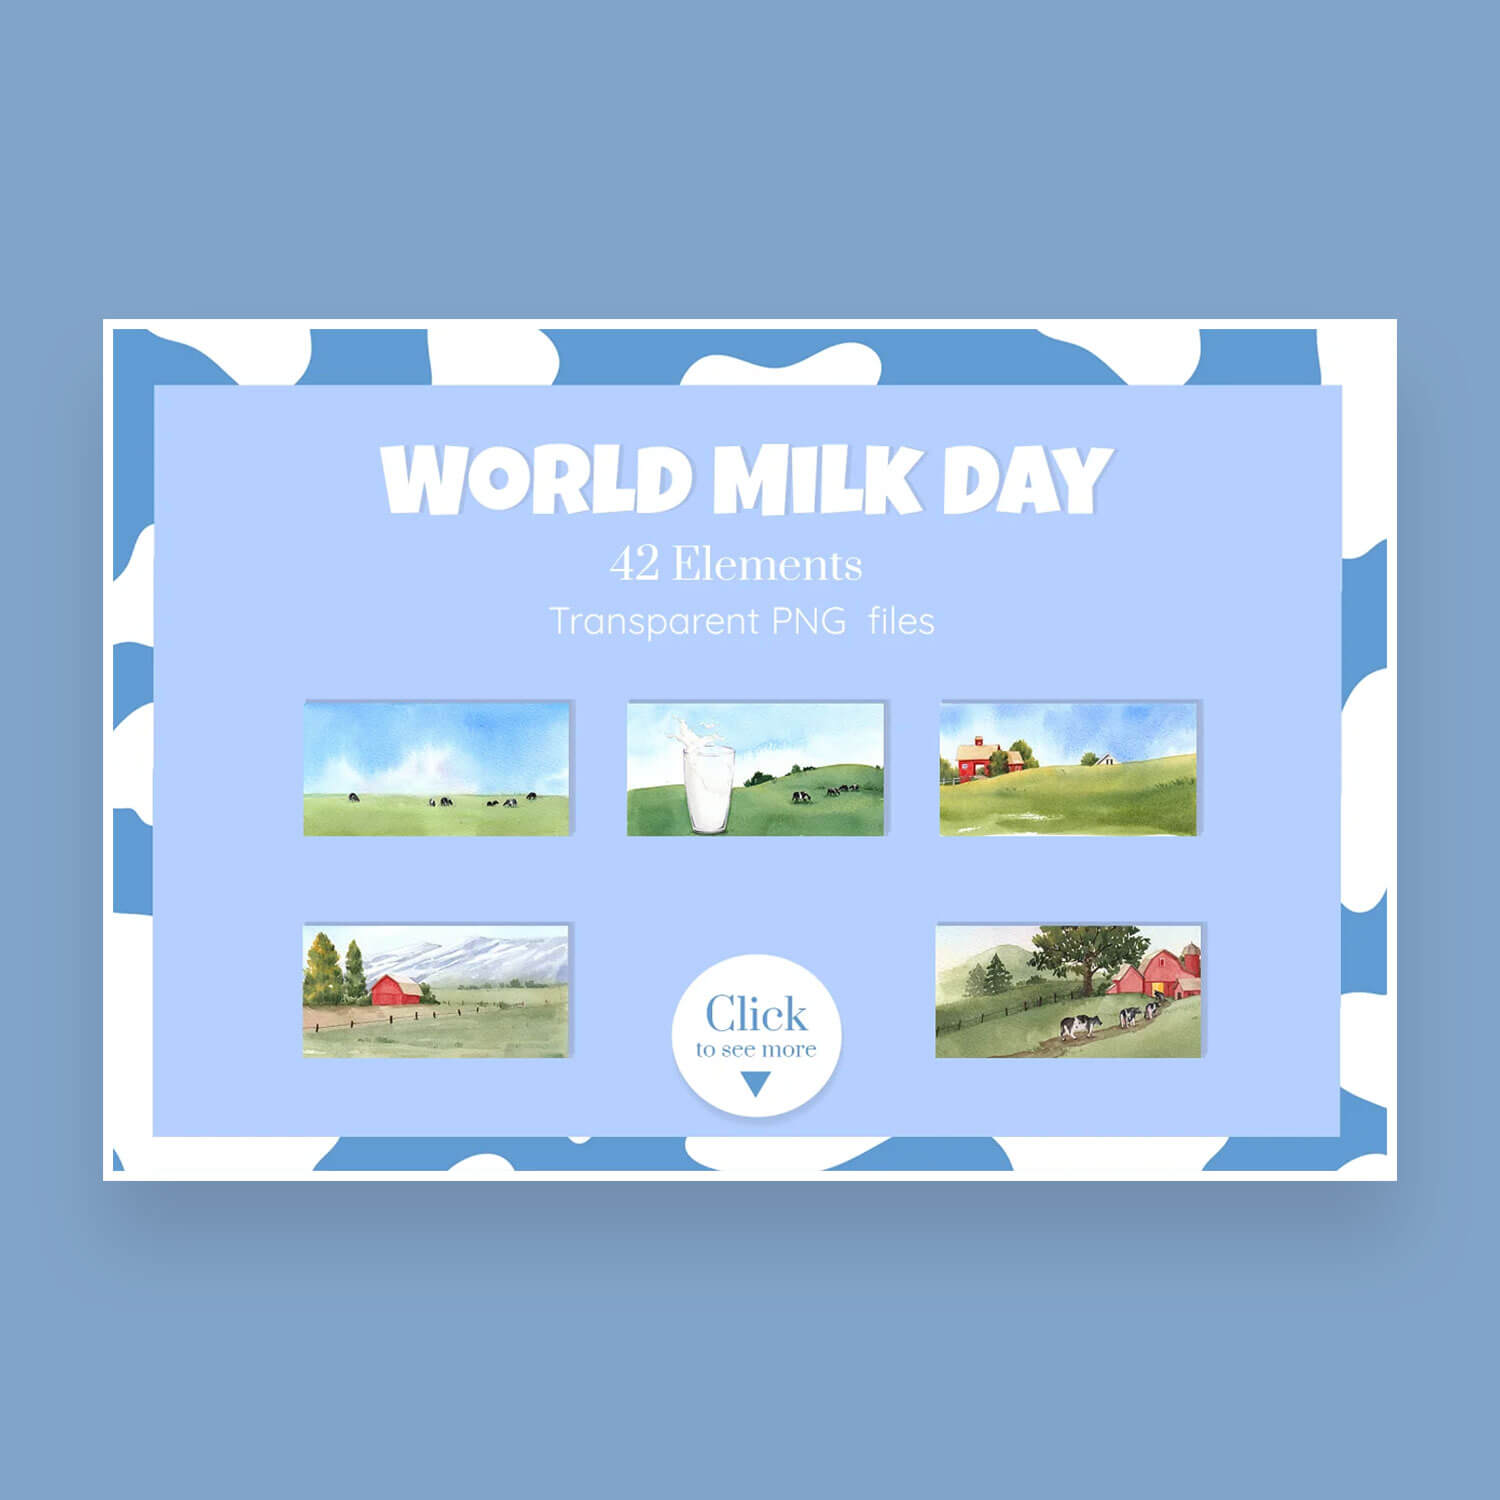 nscription: World Milk Day, 42 Elements Transparent PNG files.